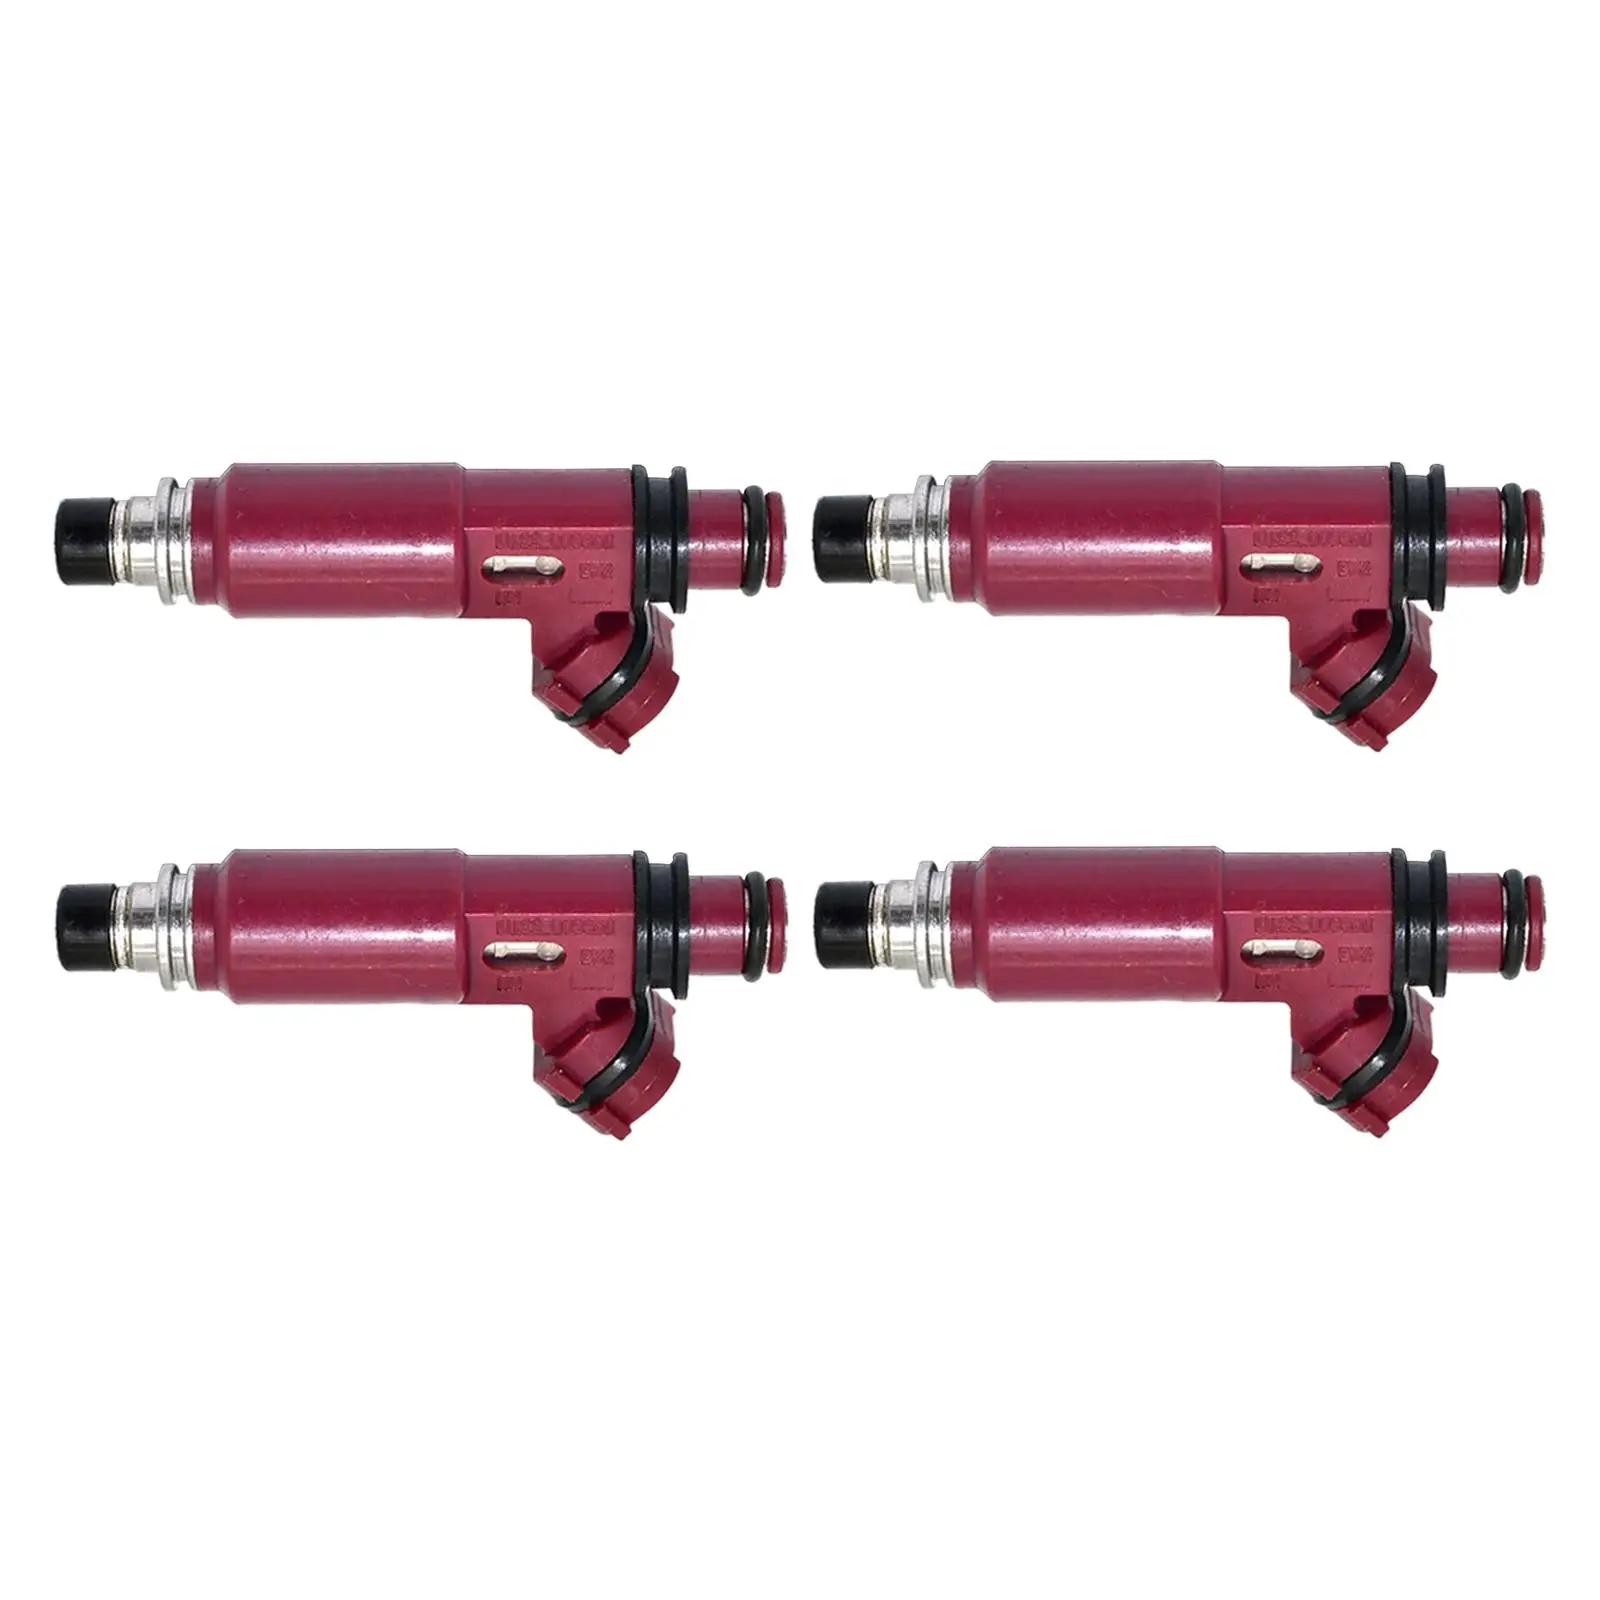 4x Fuel Injector Nozzle Replaces Part for Mazda Miata 1.8L L4 1999-2000